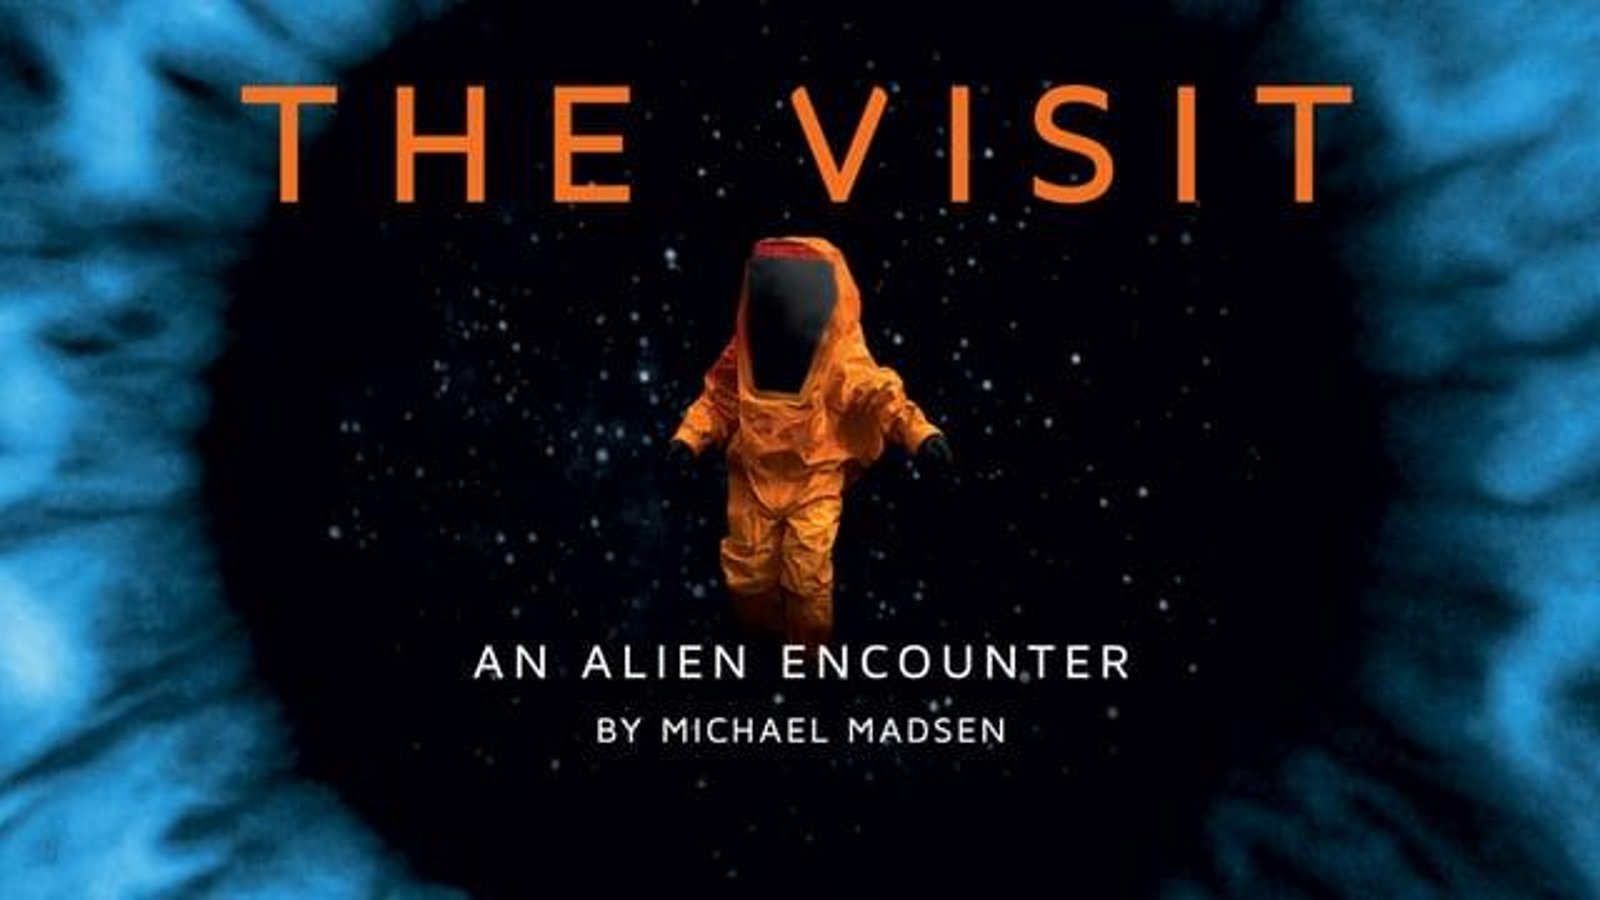 The Visit - An Alien Encounter